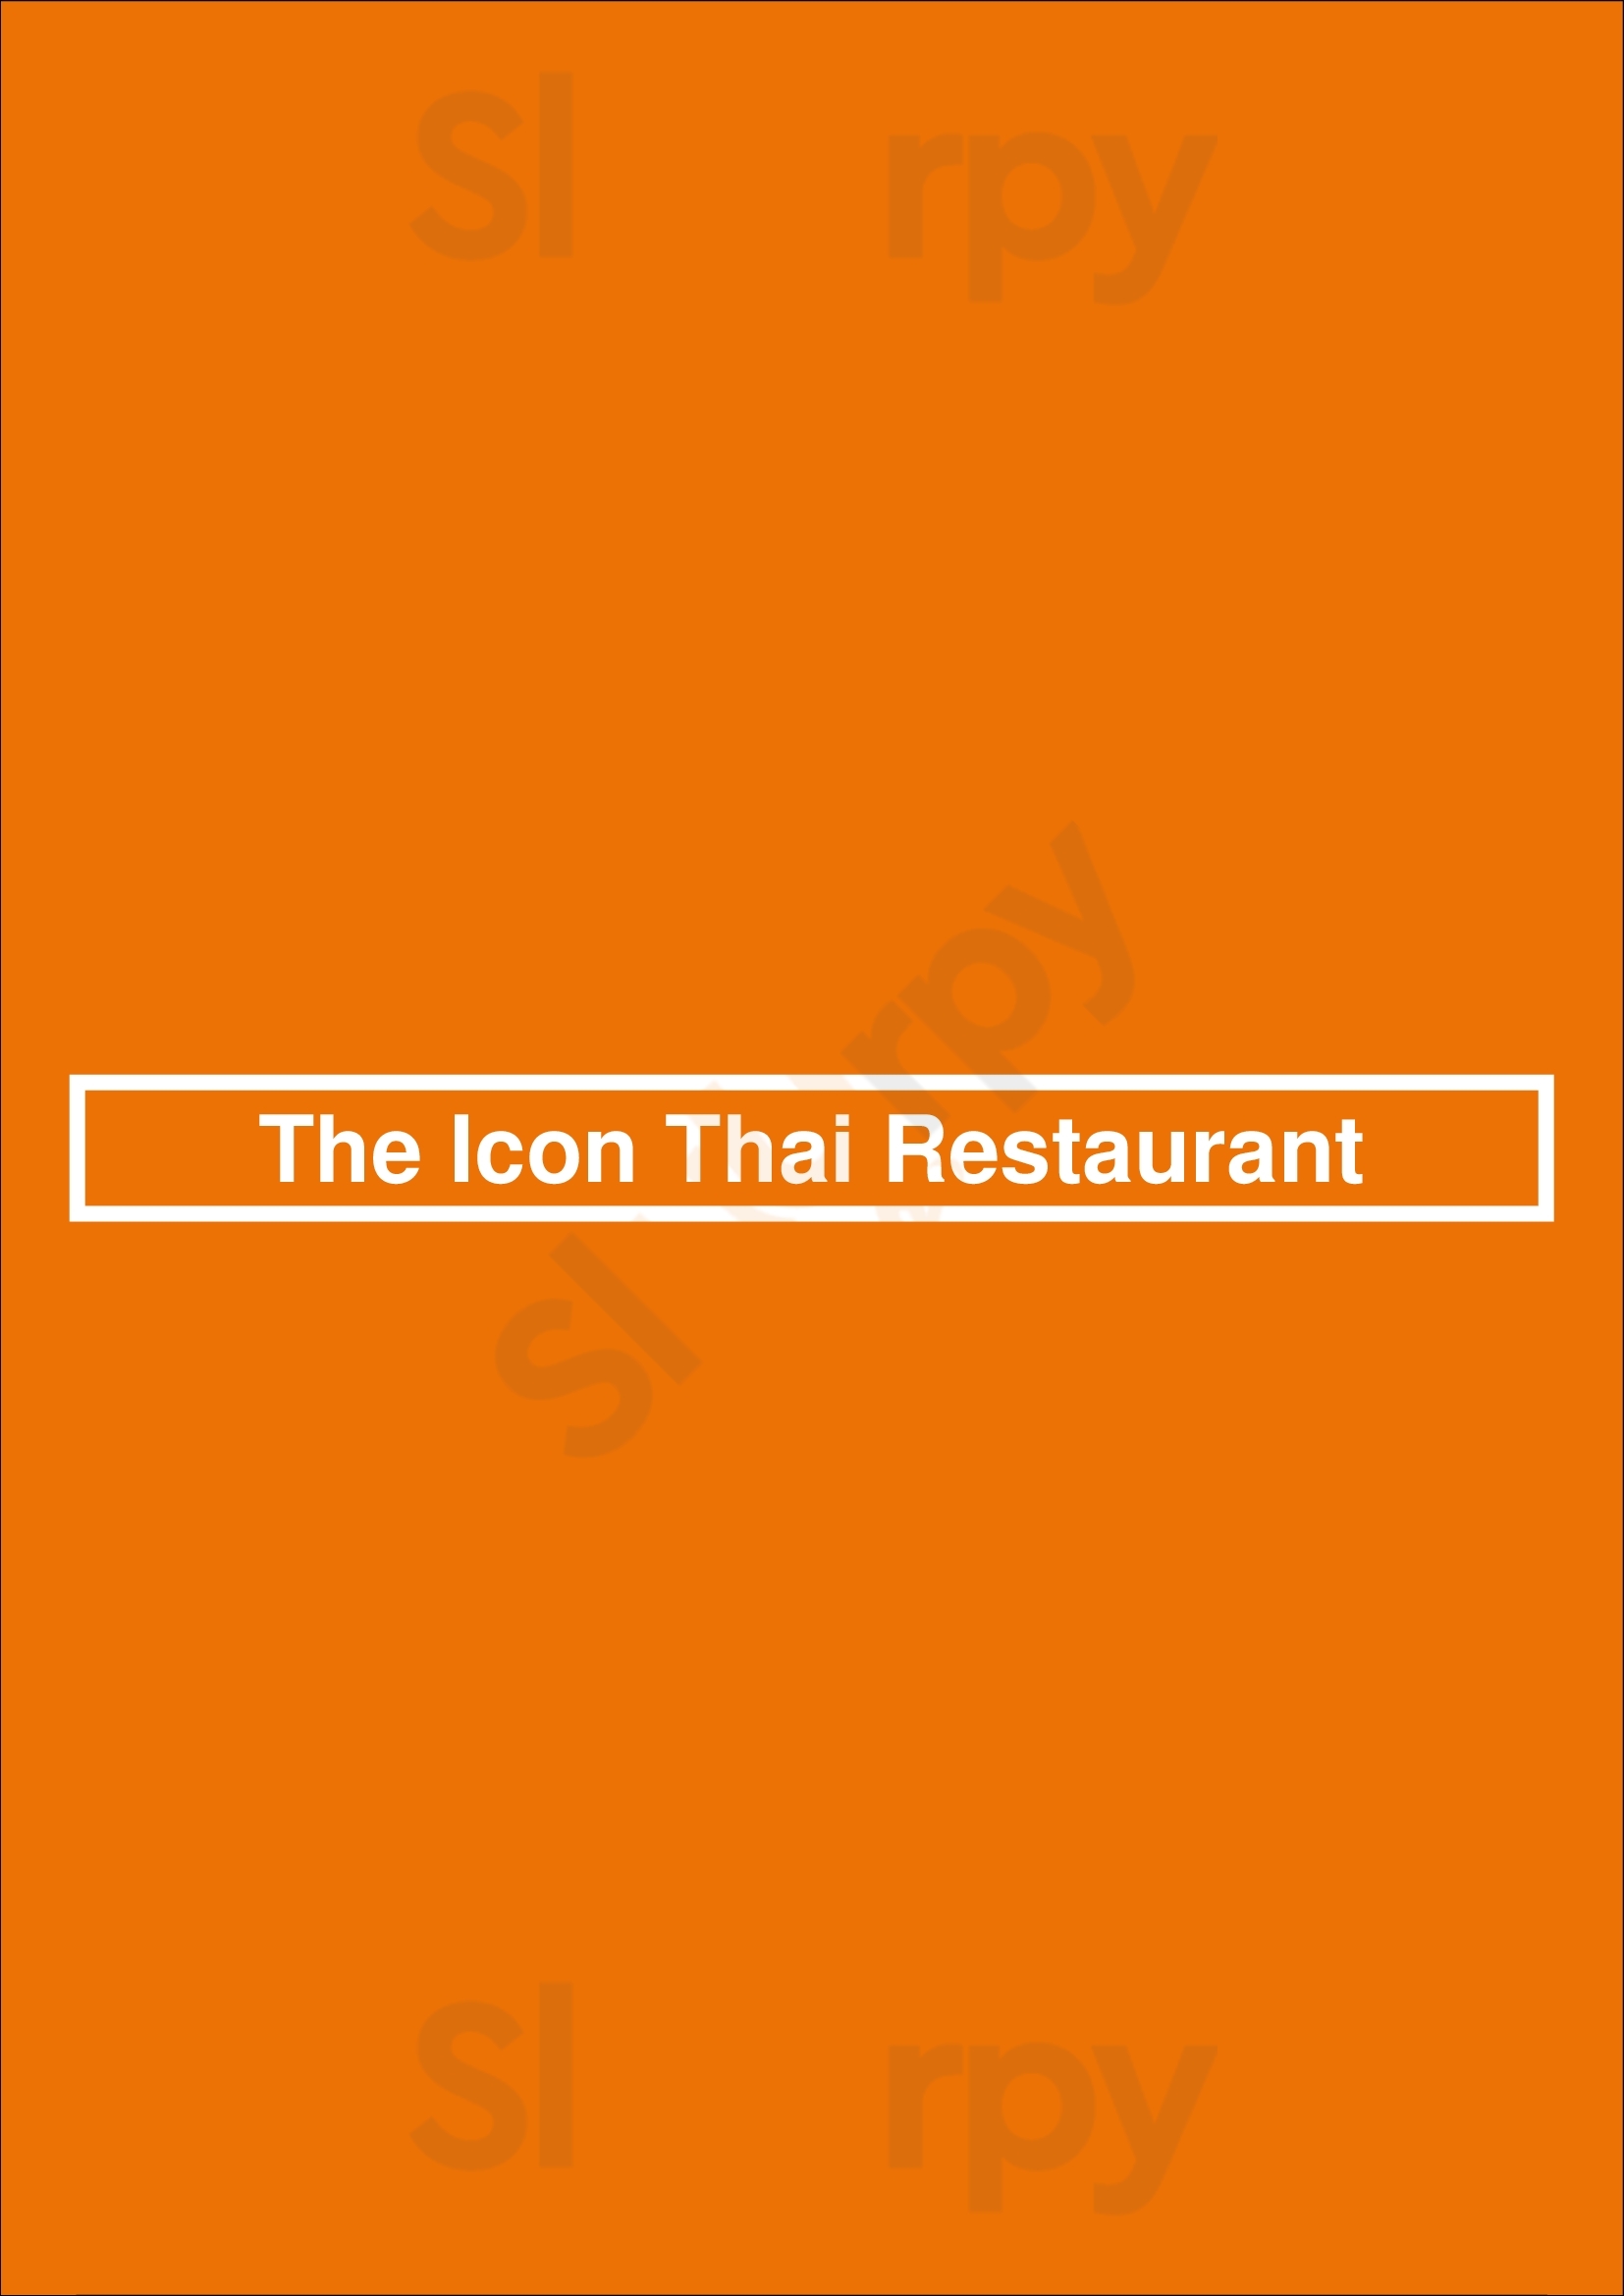 The Icon Thai Restaurant Newcastle Menu - 1